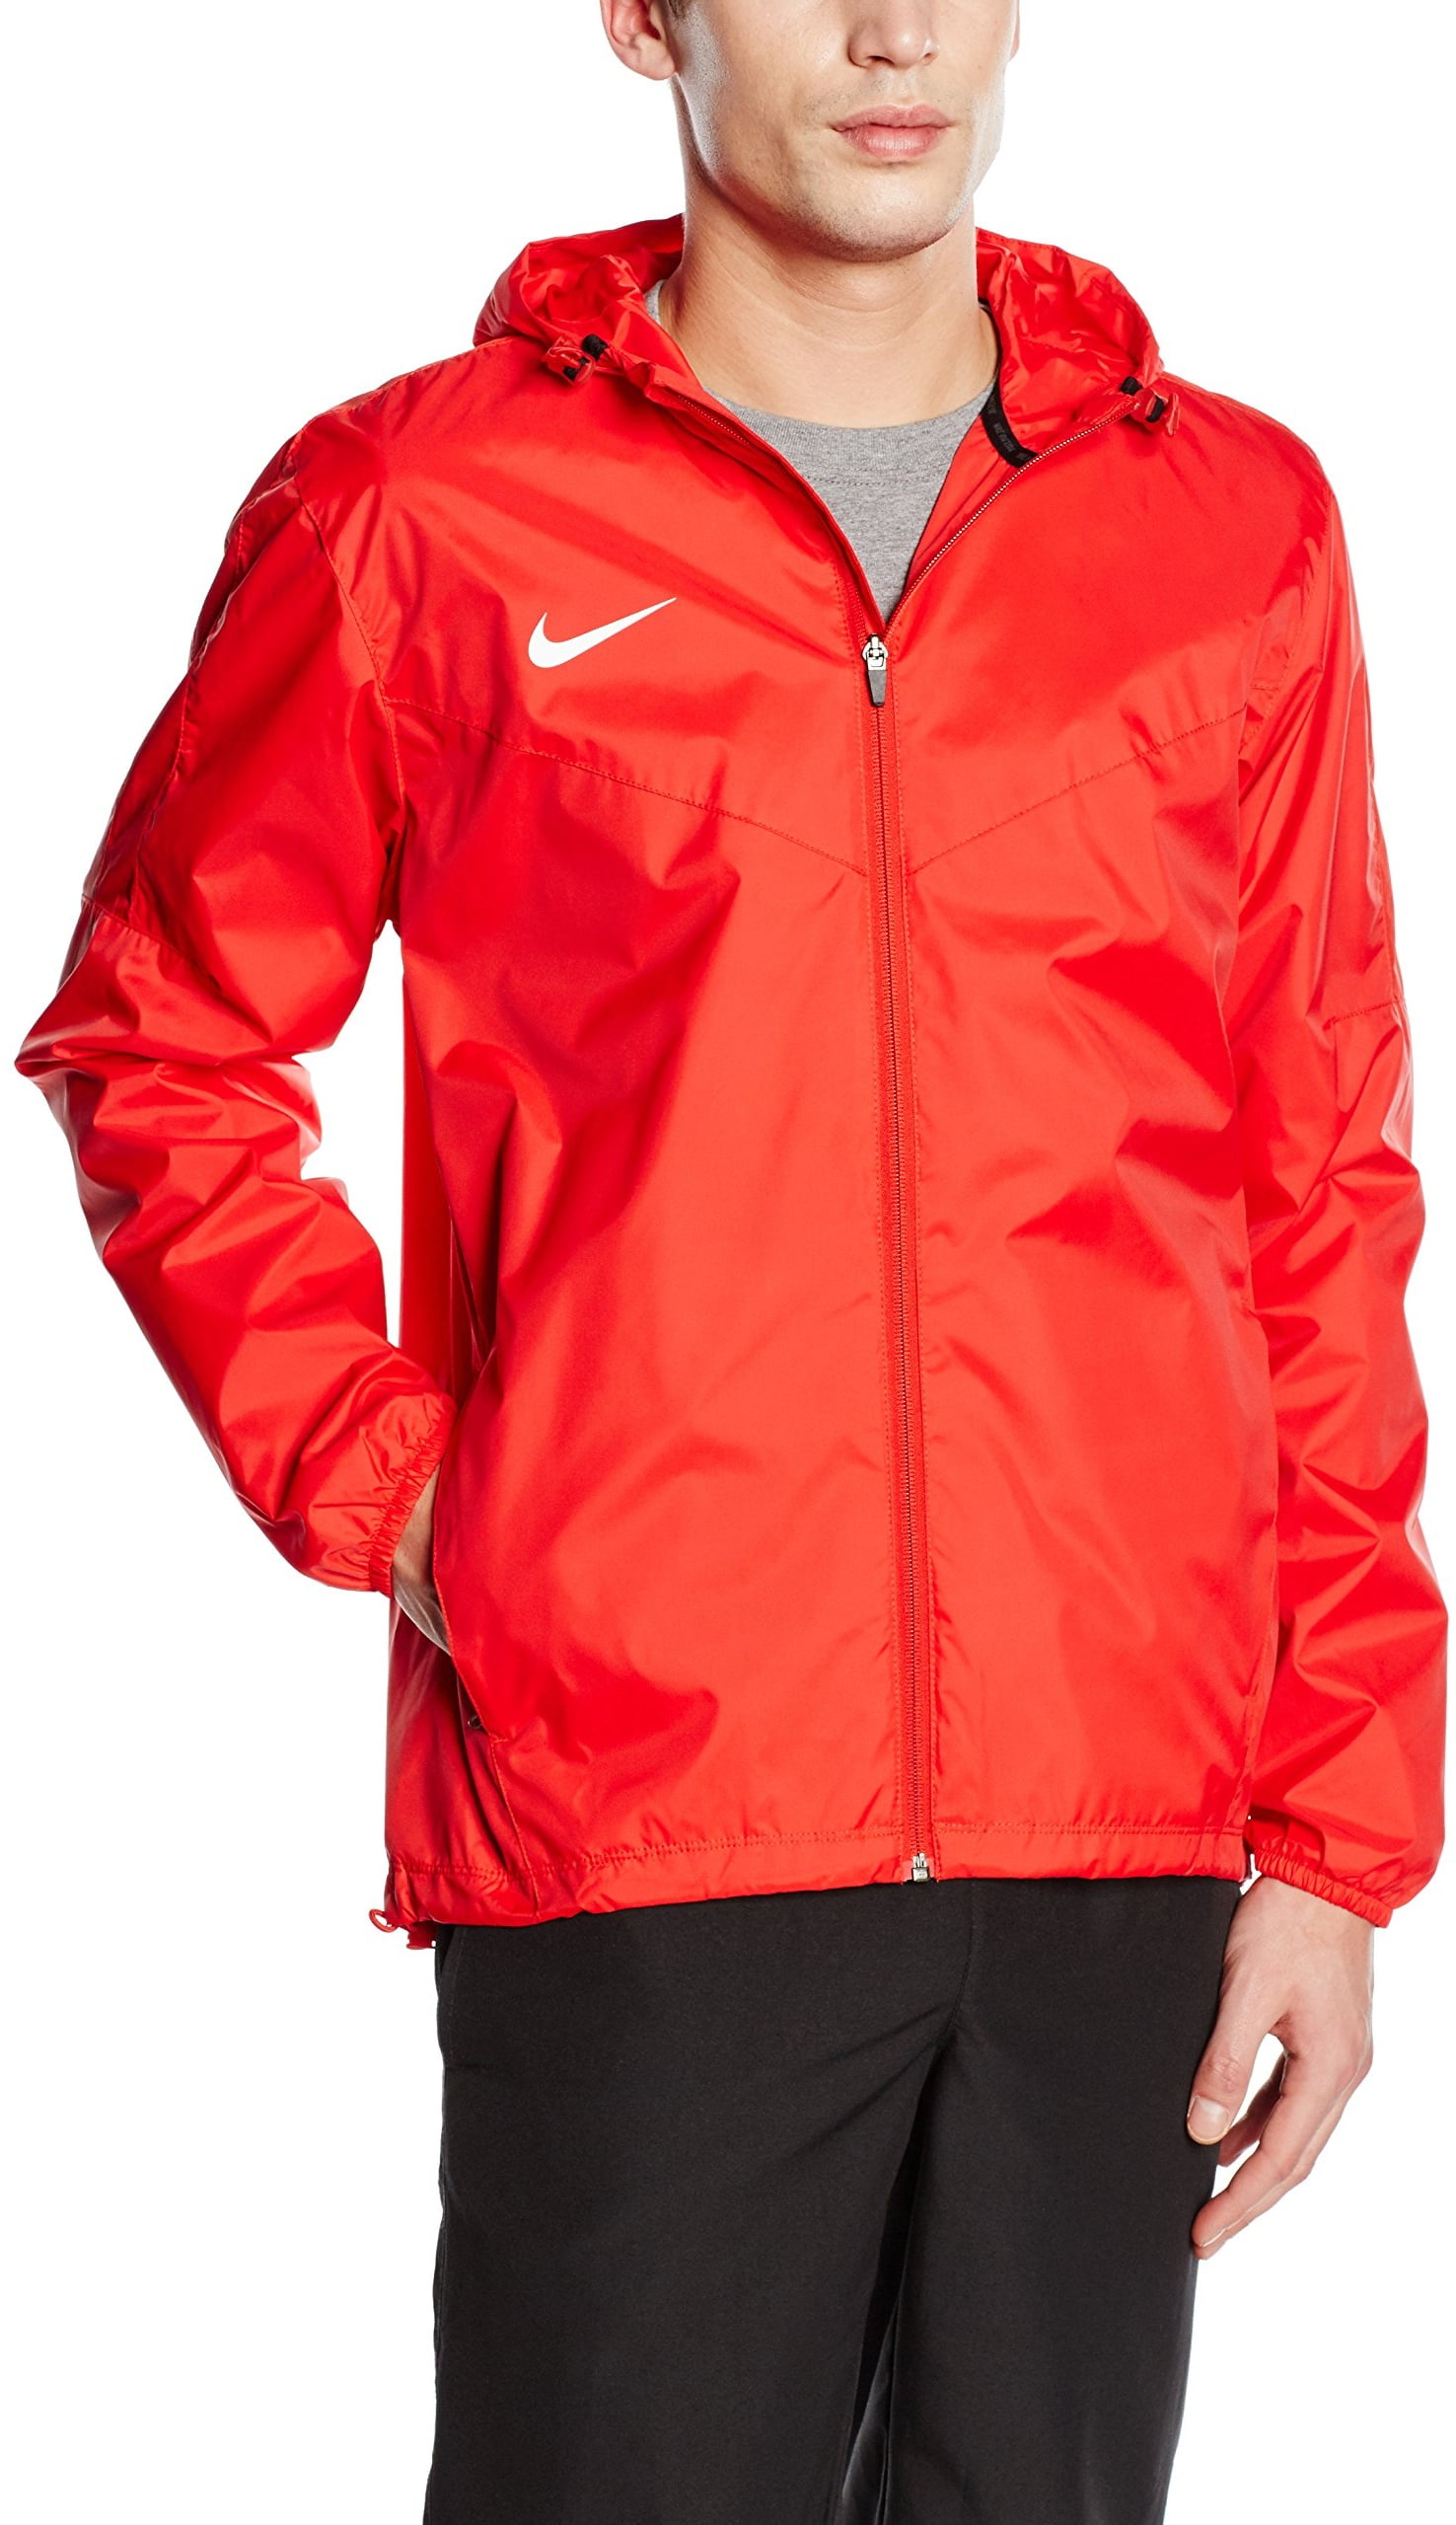 Nike Men's Team Sideline Rain nk645480 657 (Red, Medium) - Walmart.com